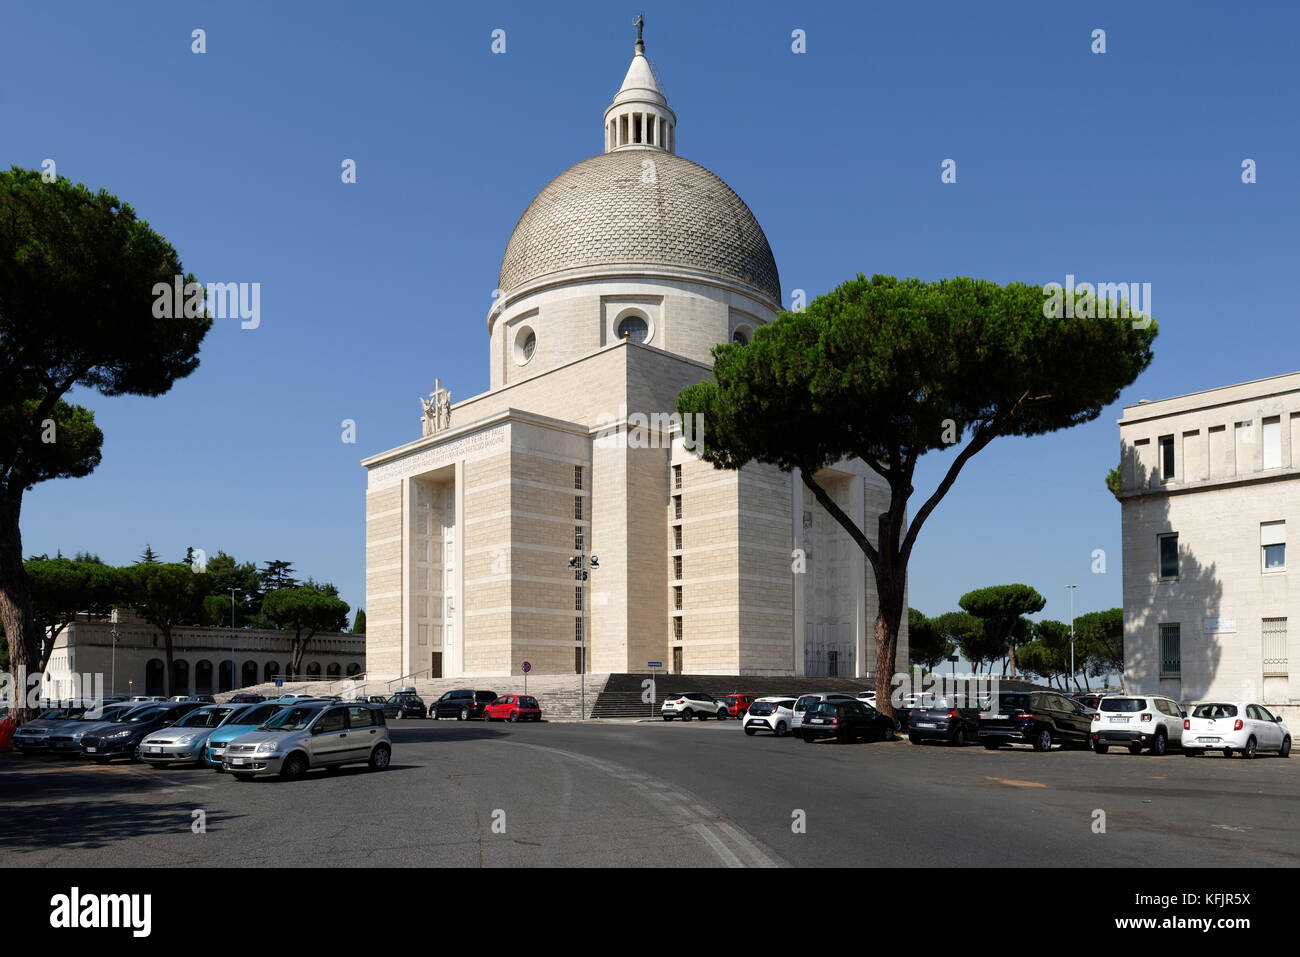 View of the Basilica of Saints Peter and Paul (Basilica dei Santi Pietro e Paolo). EUR, Rome, Italy. Stock Photo